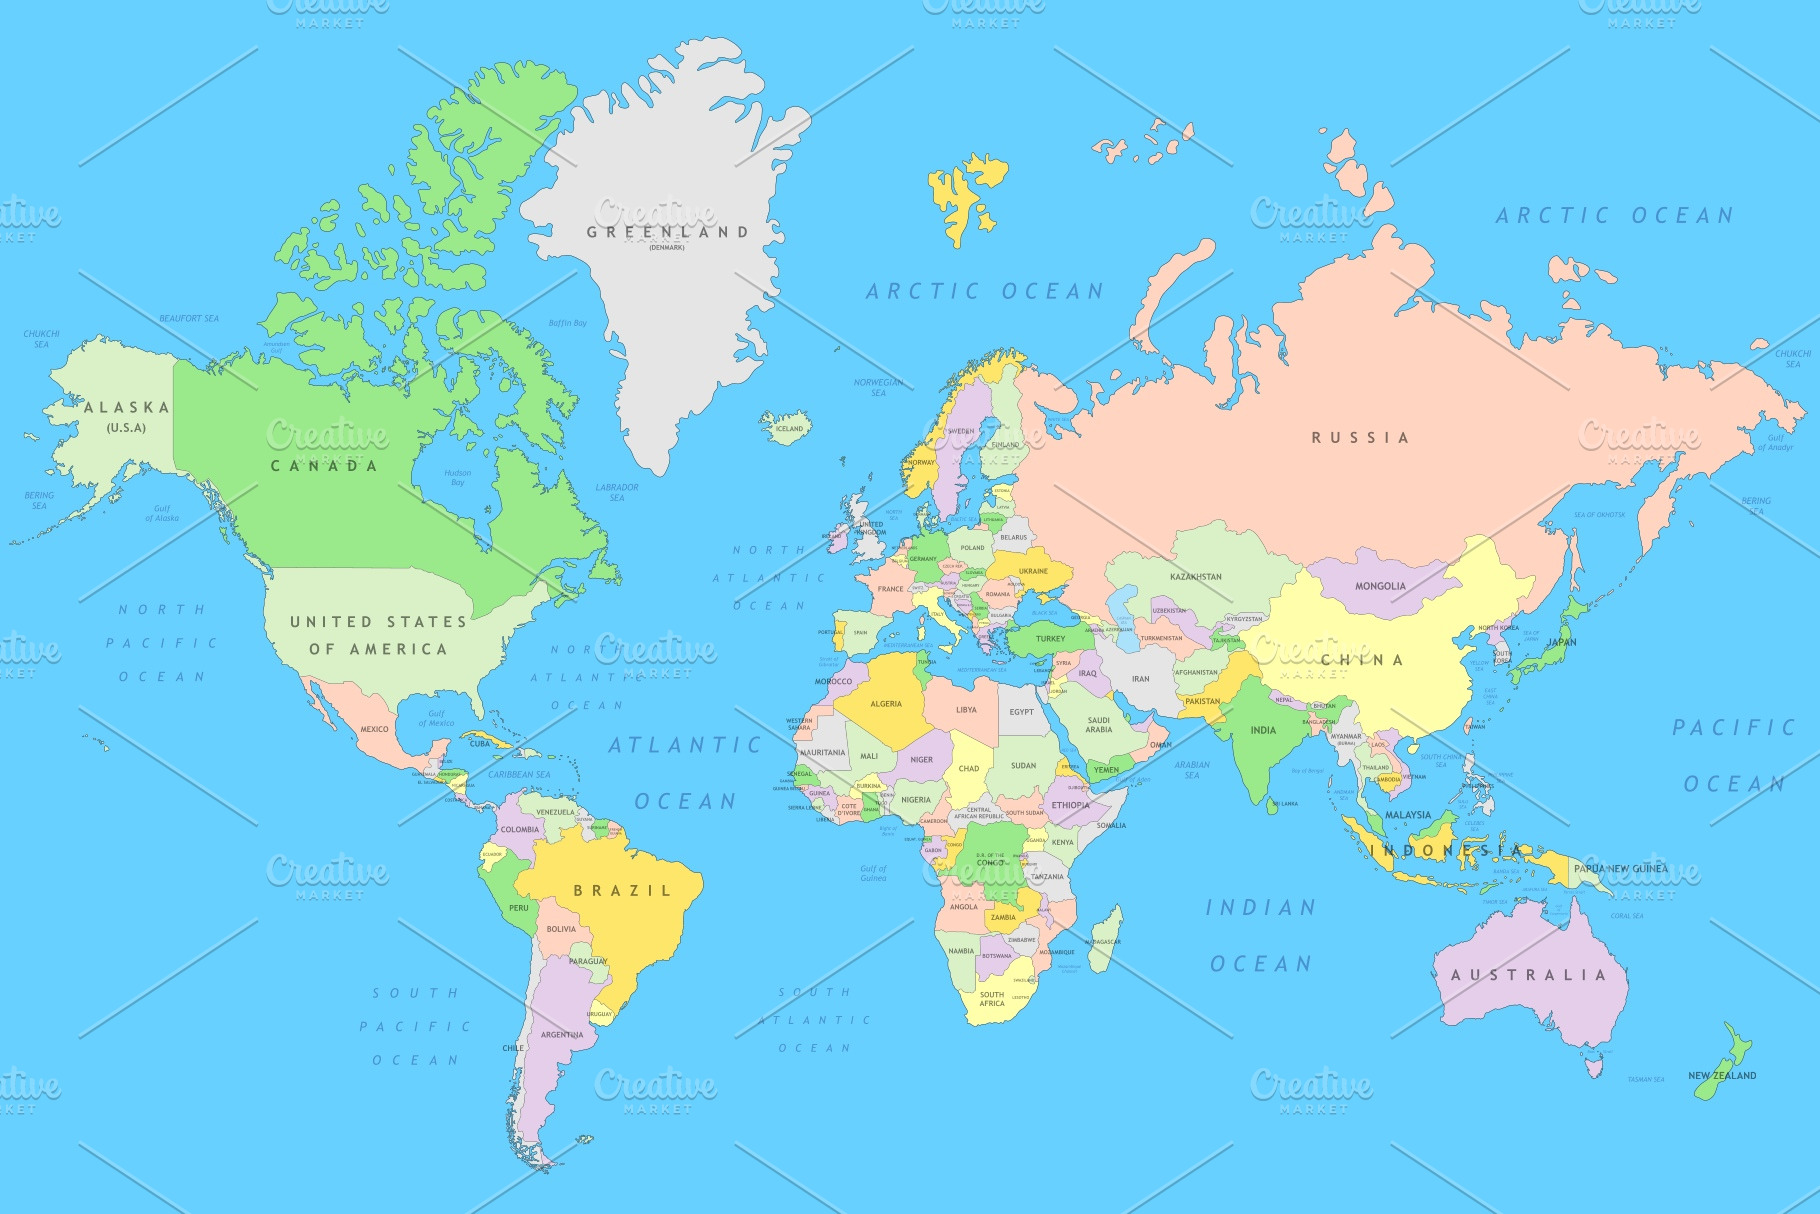 Political world map ~ Illustrations ~ Creative Market
